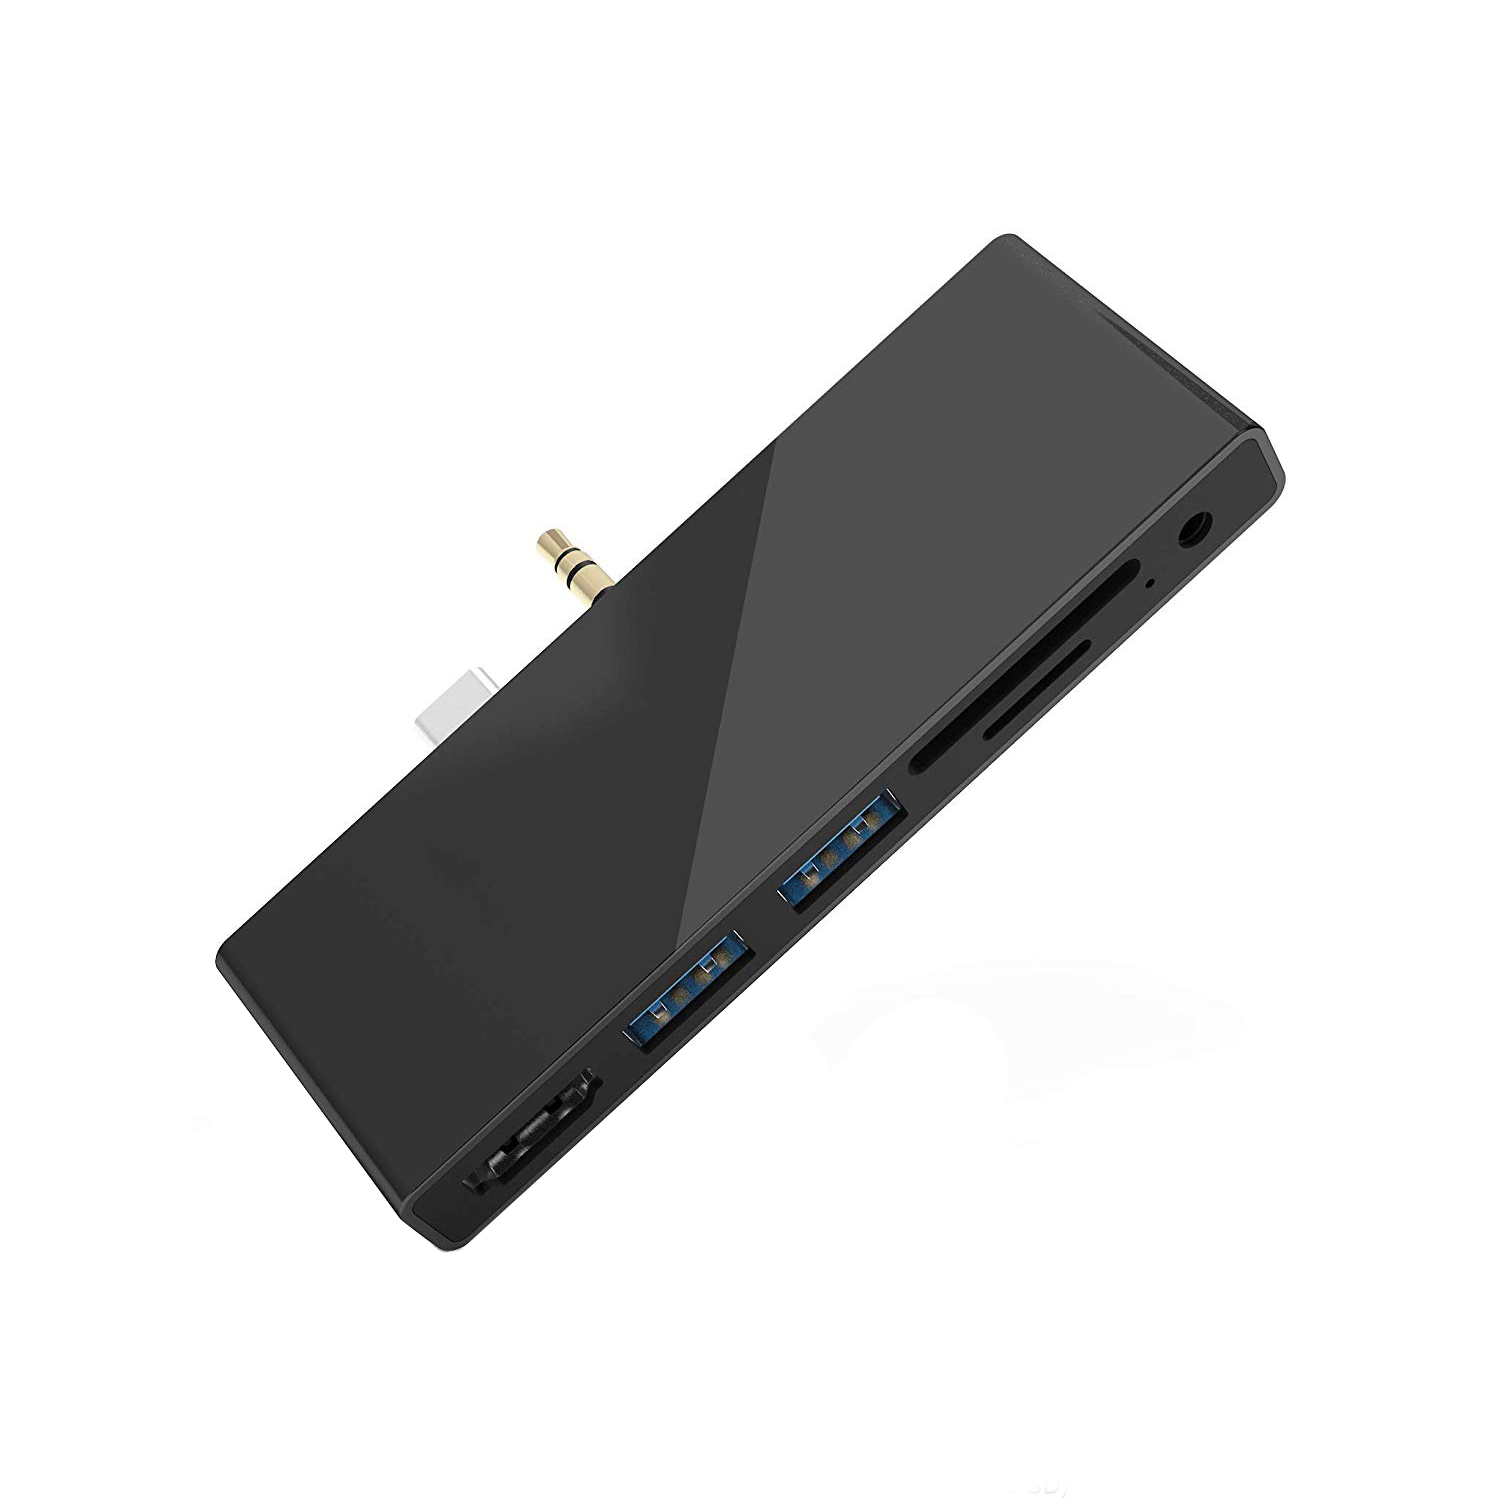 Hub with 4K 30HZ HDMI USB 3.0 Audio Jack SD/TF Card Reader for Microsoft Surface GO Hot Sale Usb 3.0 Hub for Microsoft Surface GO Docking Station